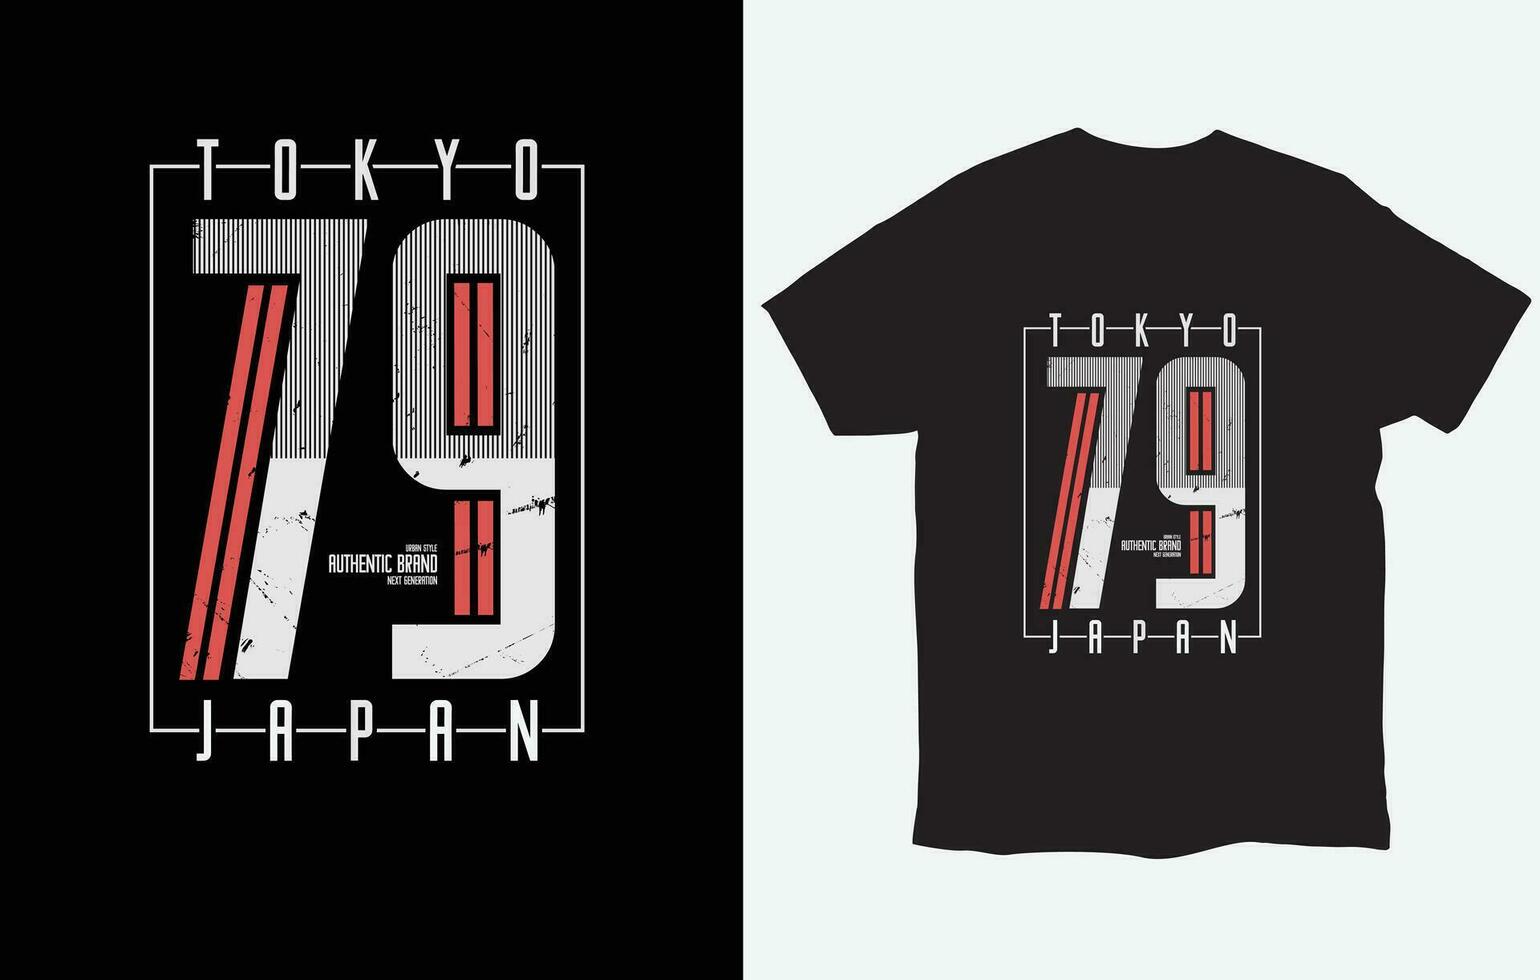 Tokyo t-shirt and apparel design vector